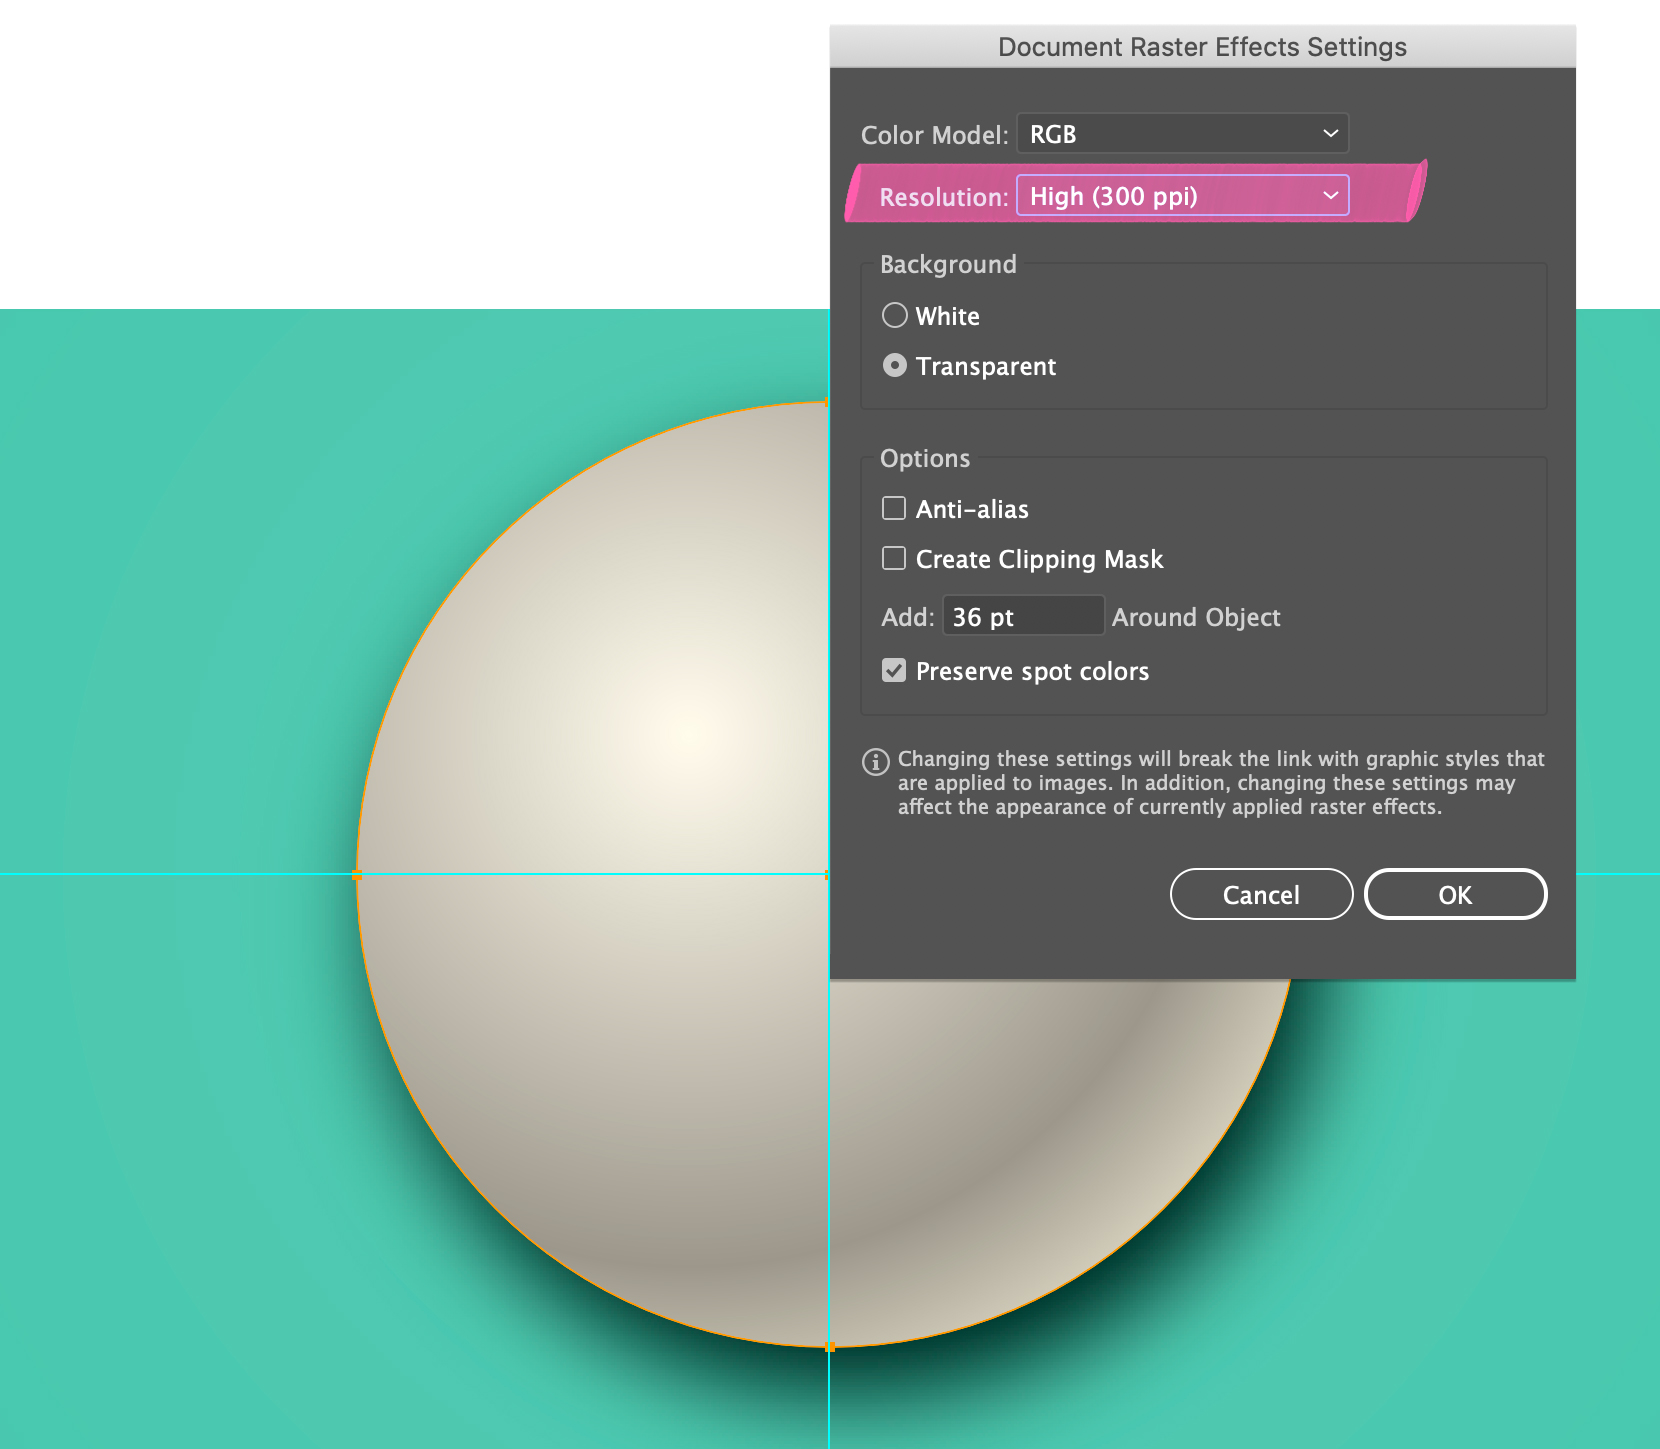 The Document Raster Effects dialog box in Adobe Illustrator